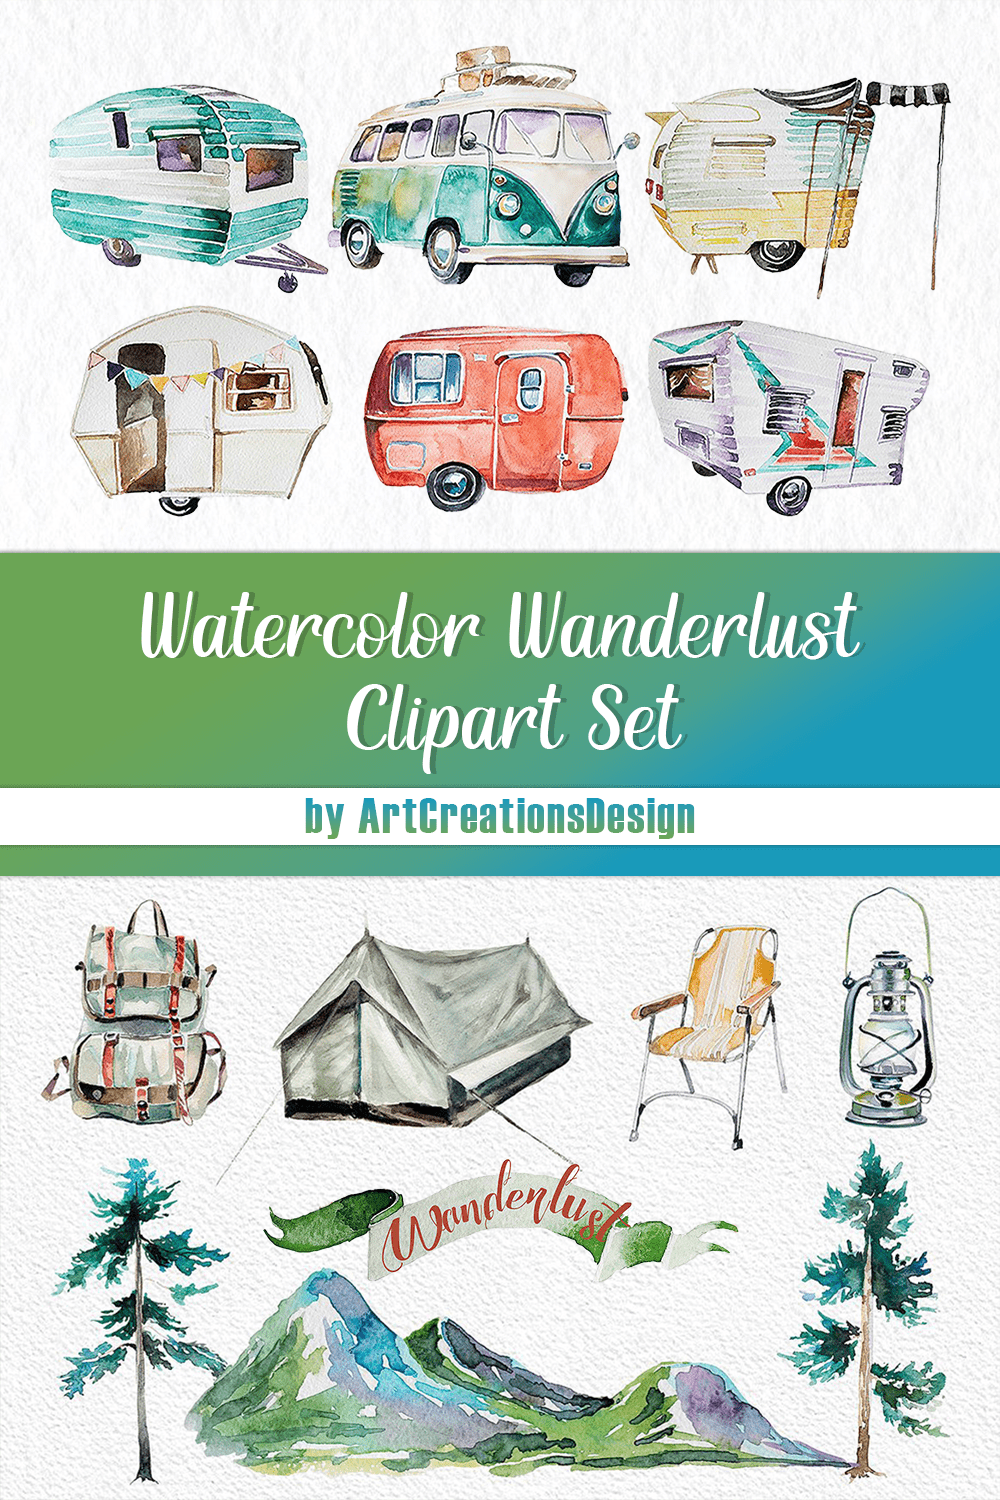 Watercolor wanderlust clipart set - pinterest image preview.